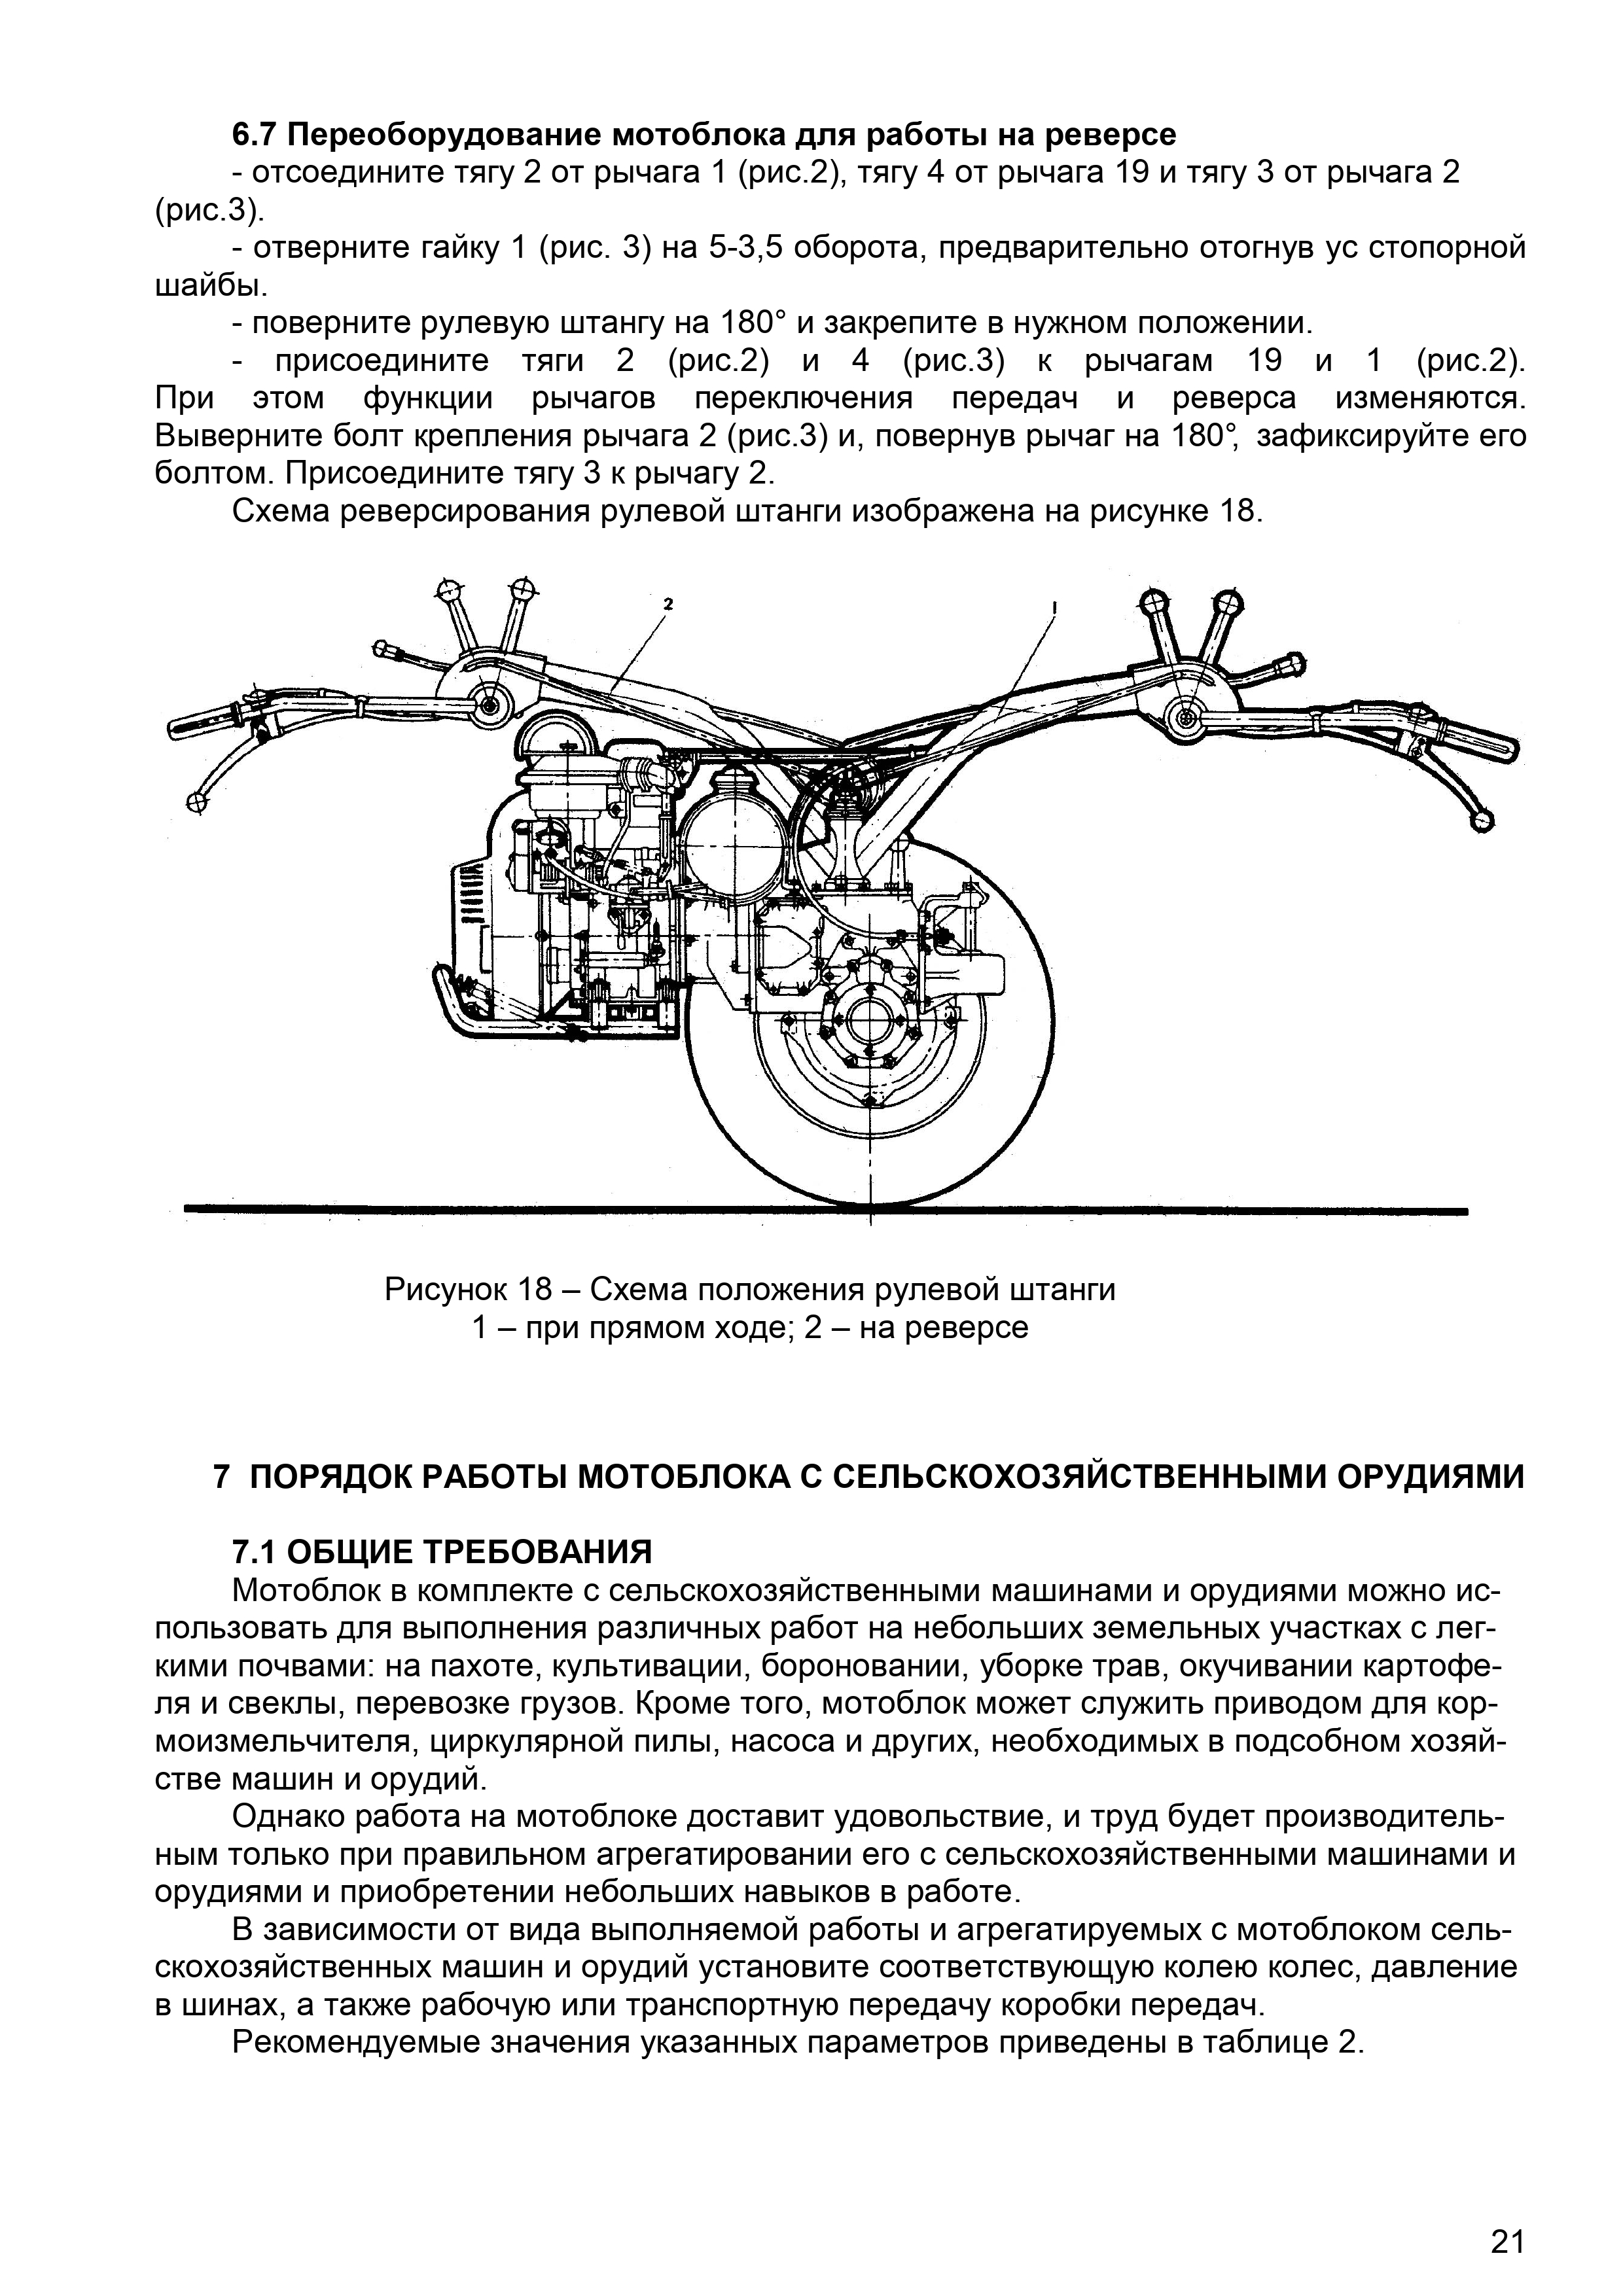 belarus_09h_manual i catalog (1)_page-0021